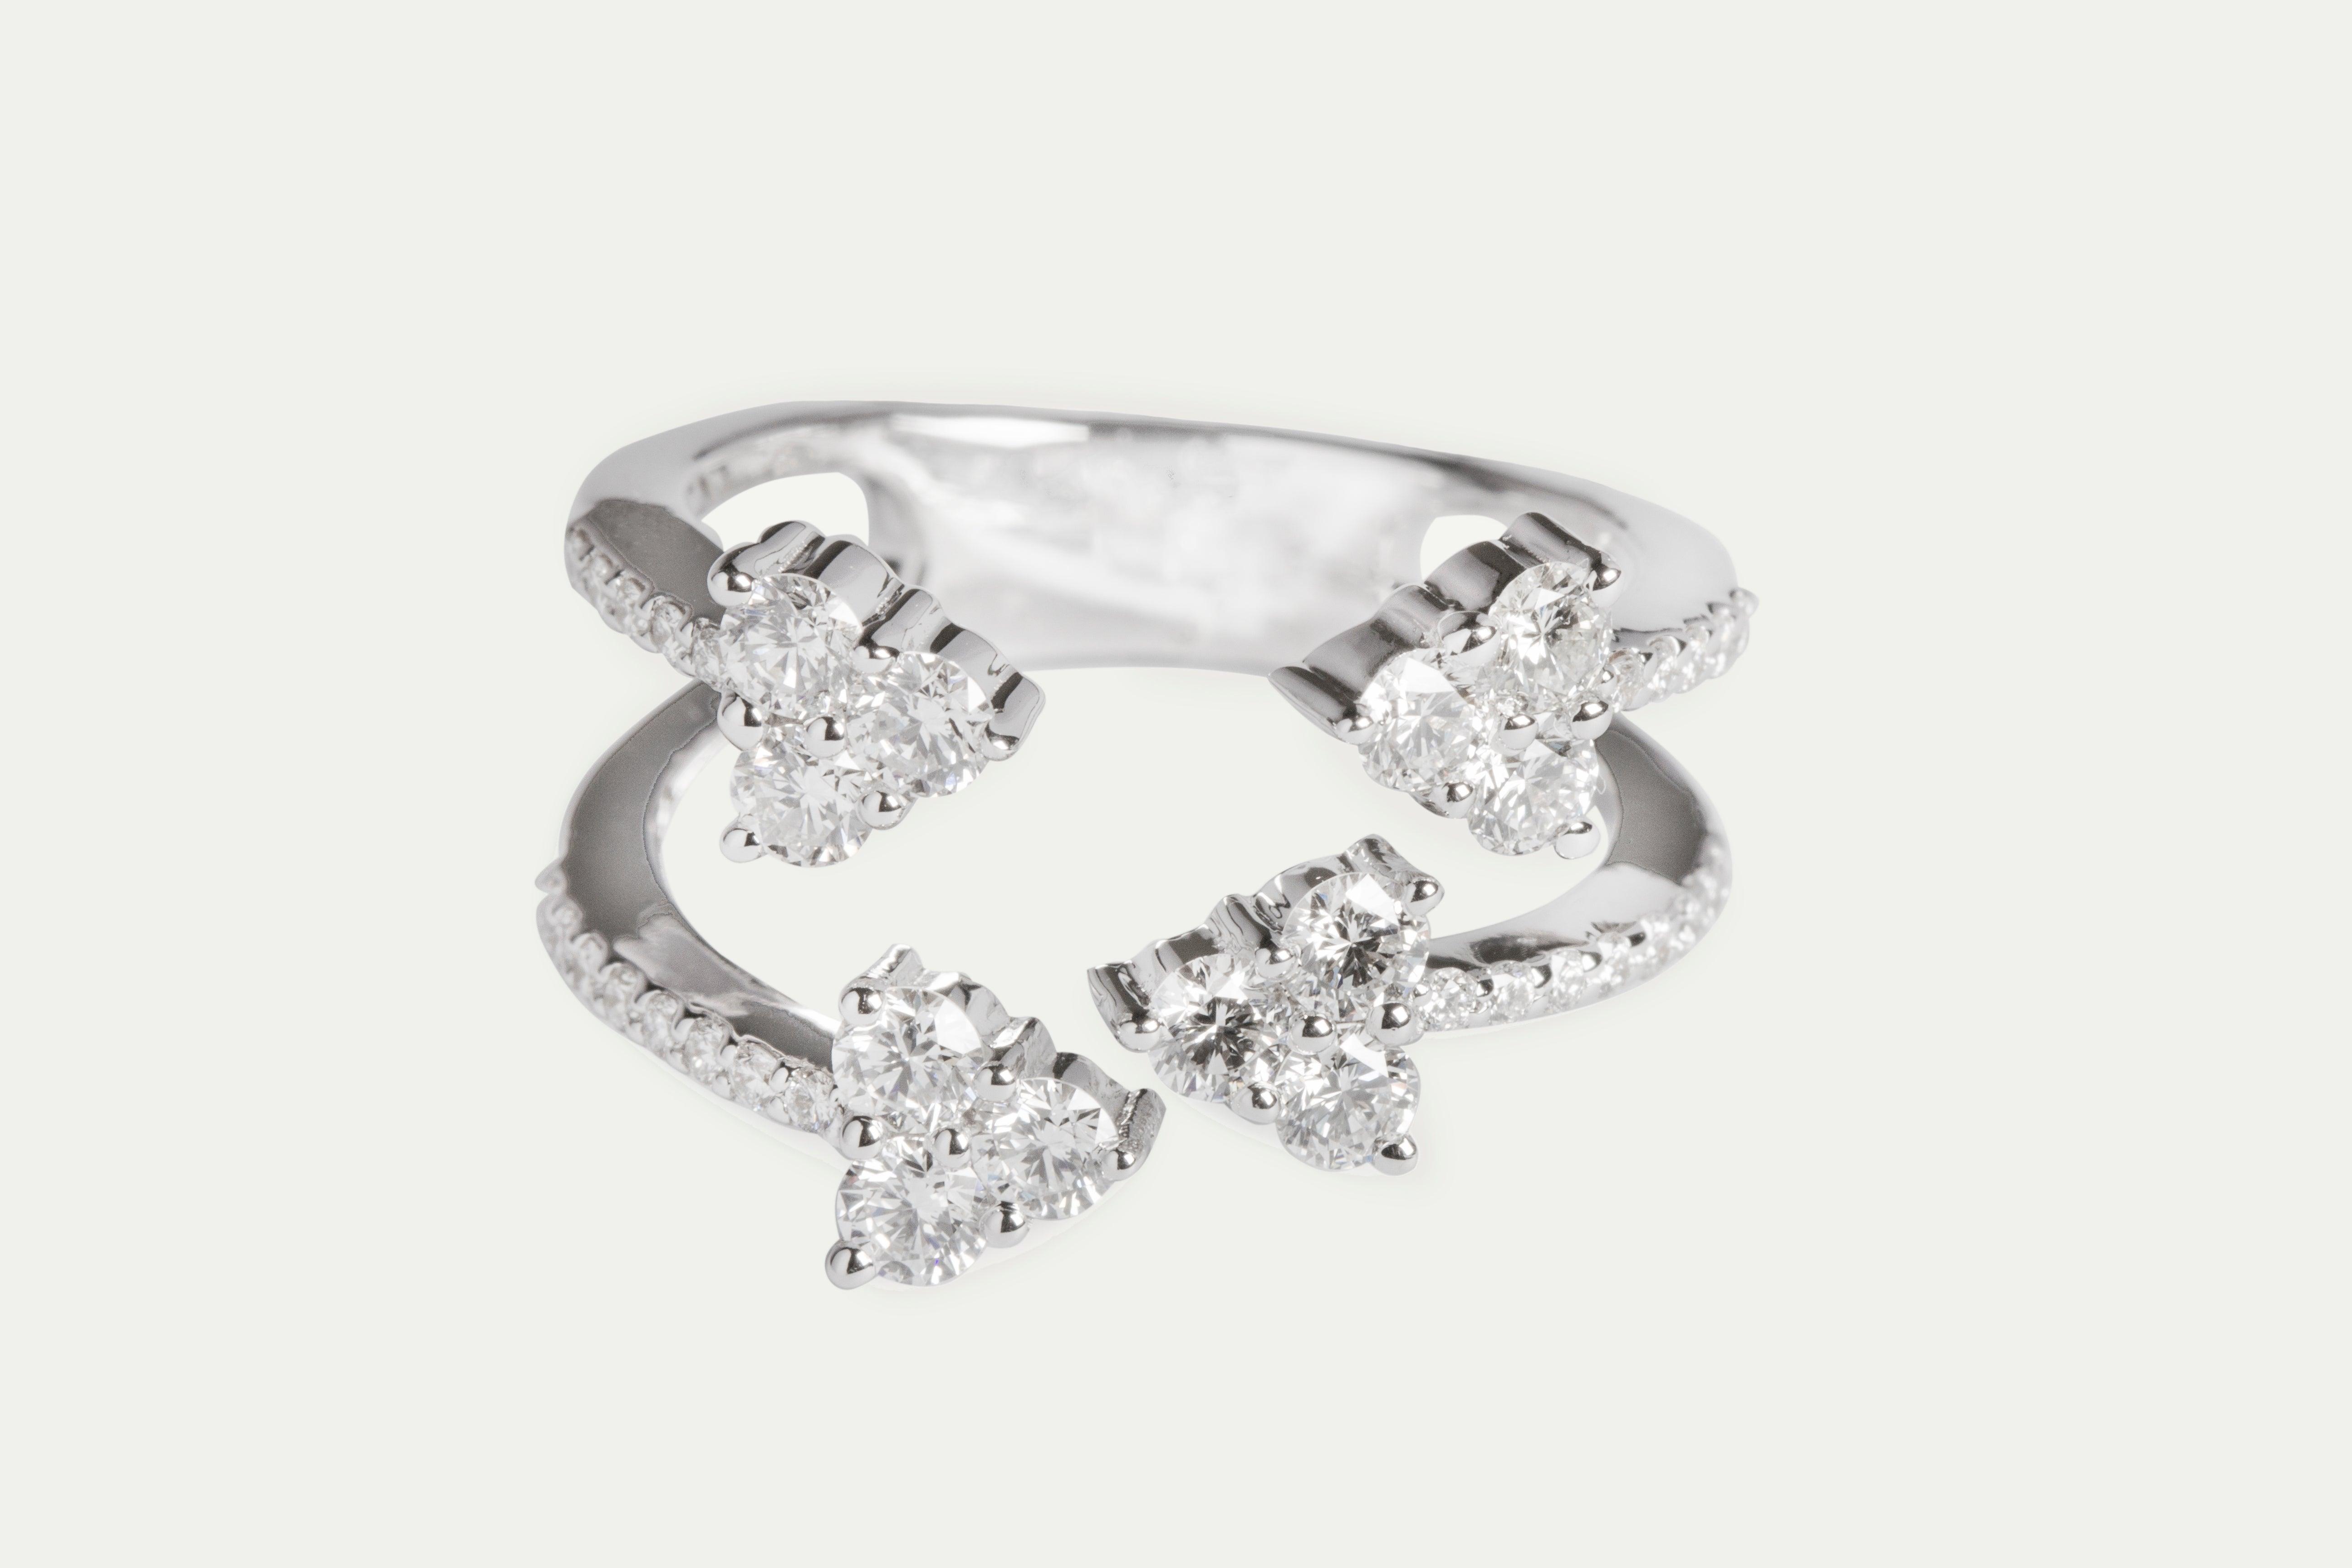 Warrier diamond ring in white gold - Anty